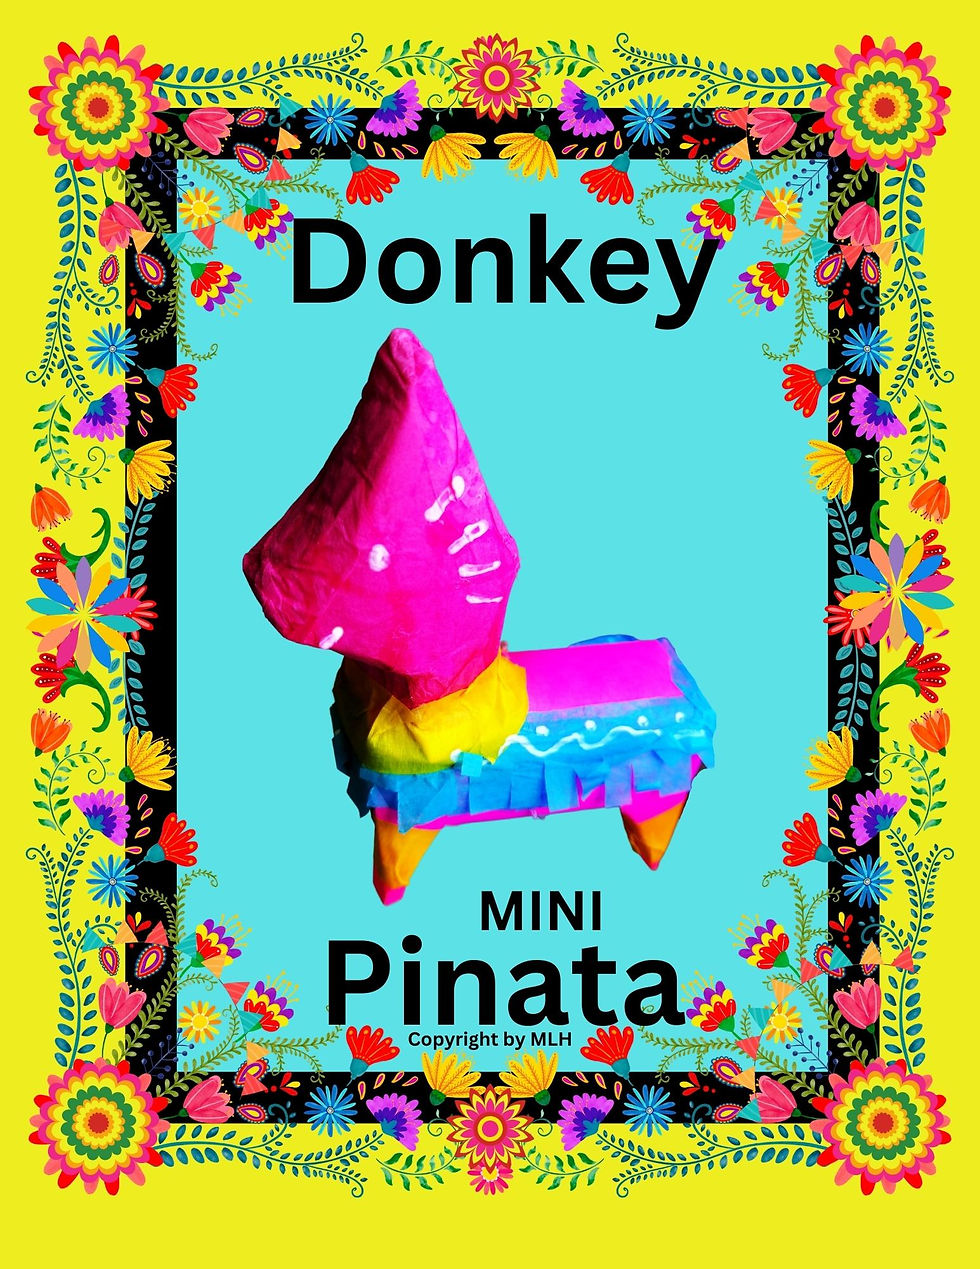 Fiesta Decoration mini donkey pinata